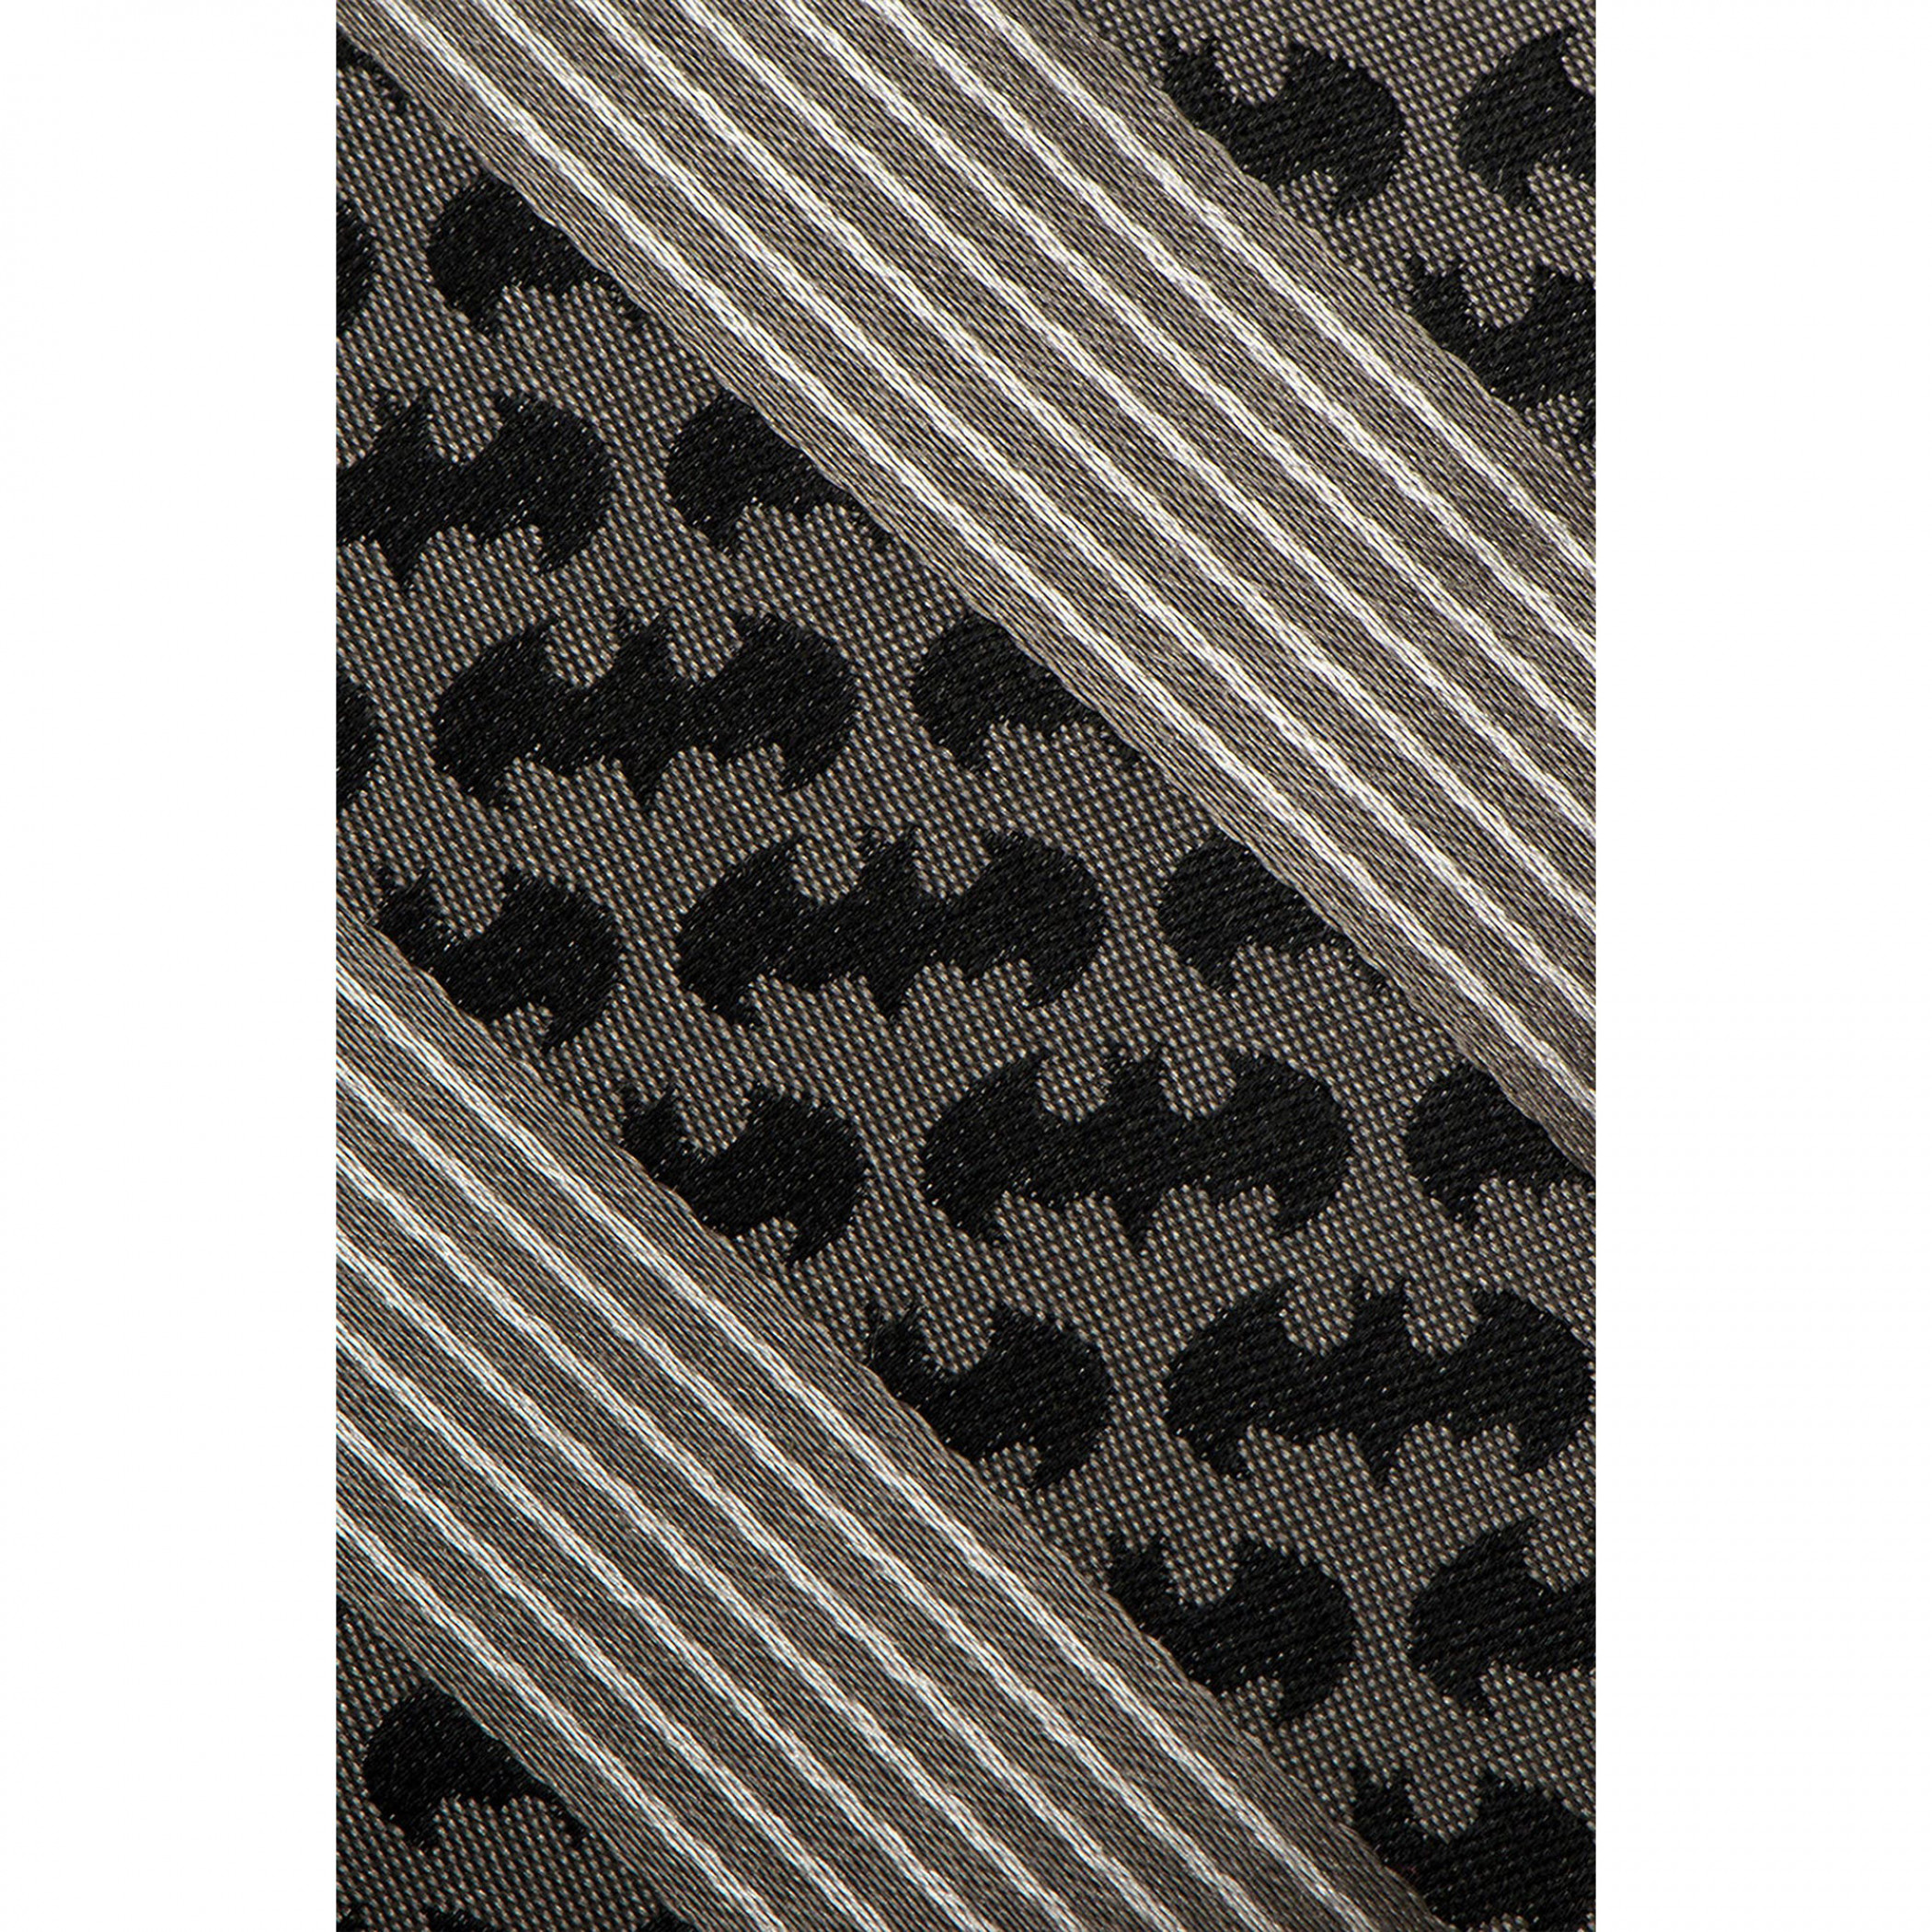 Batman Icons Black Pinstripe Silk Tie